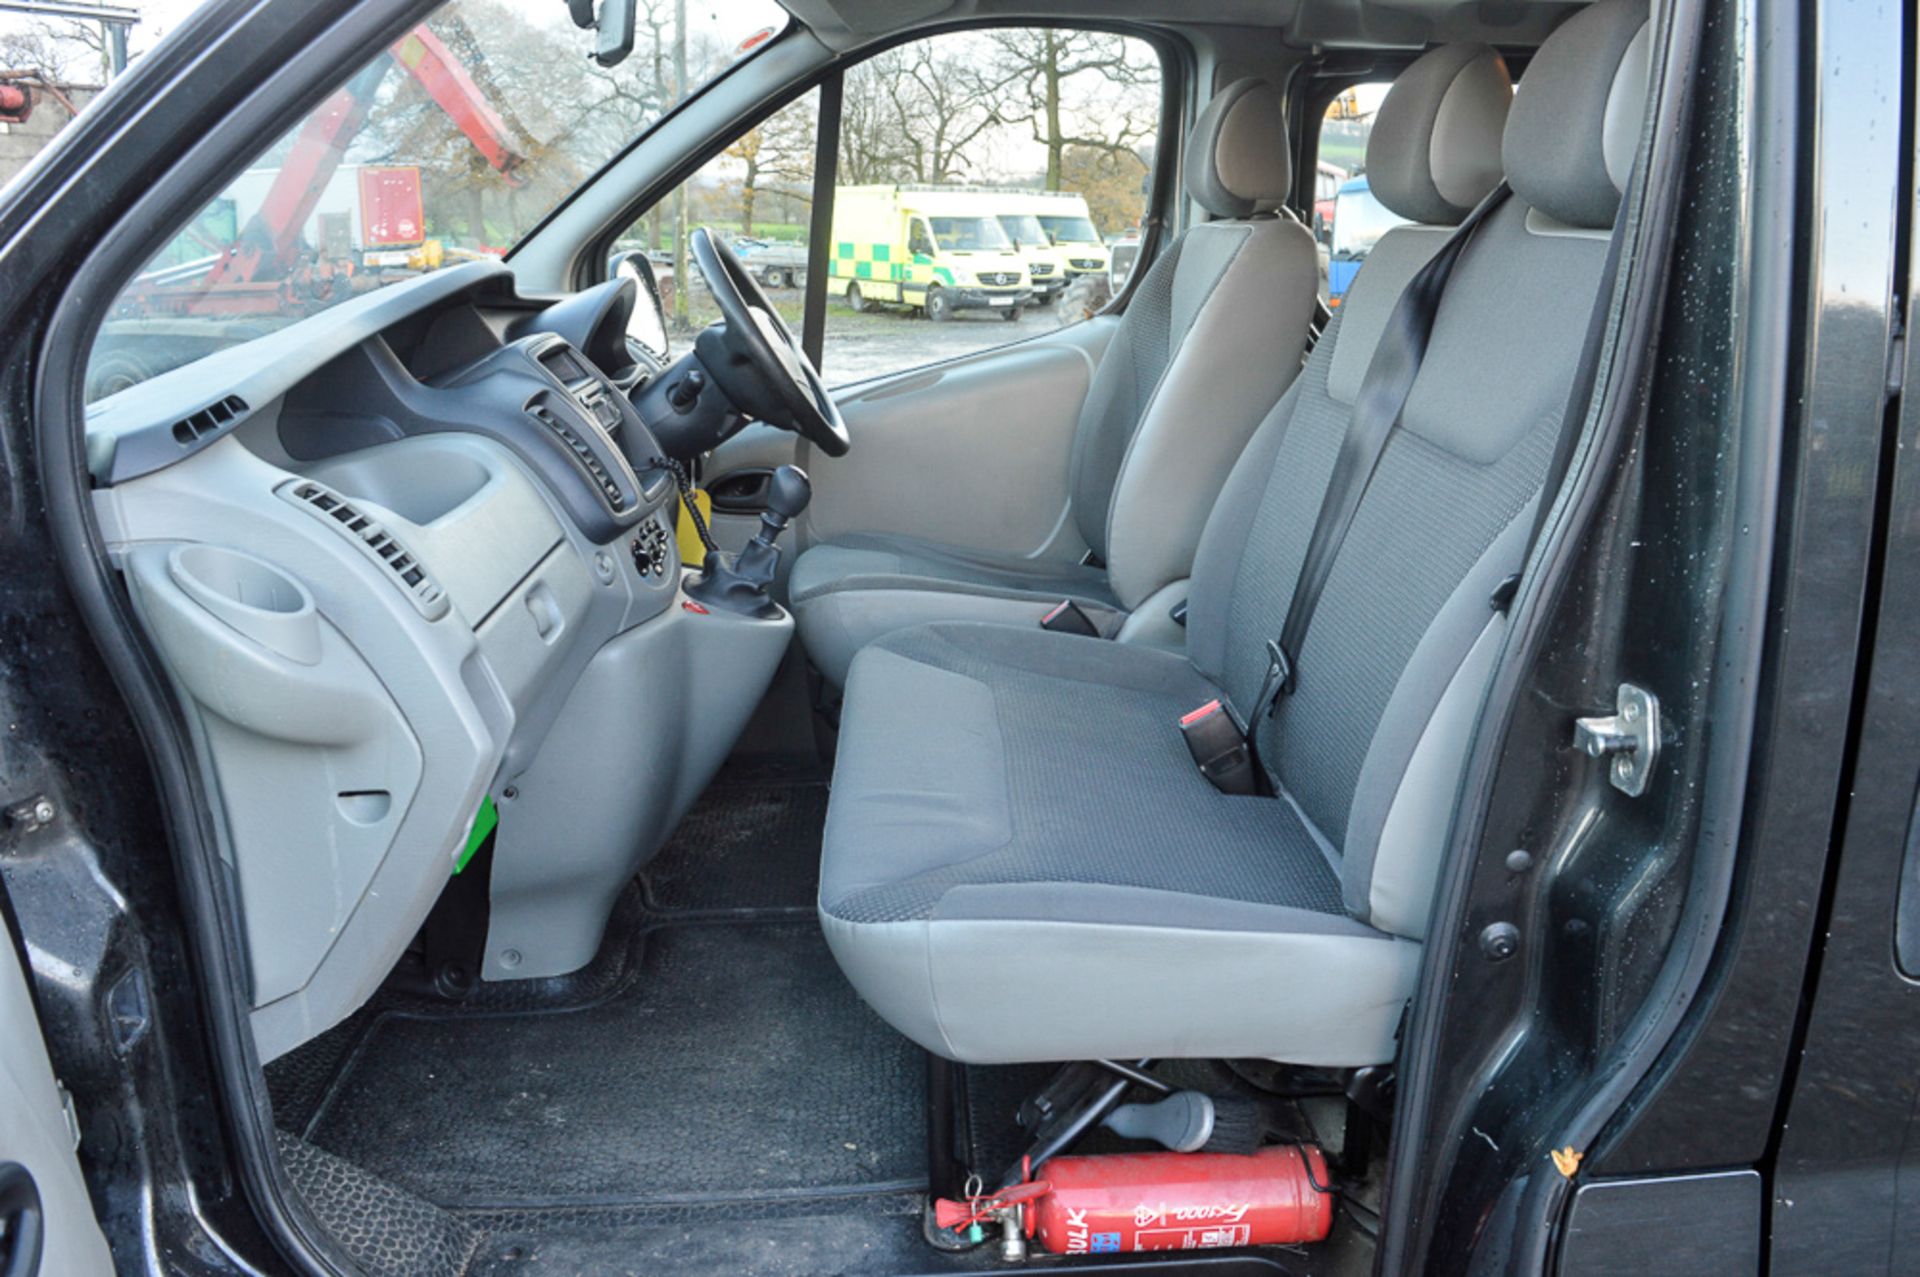 Vauxhall Vivaro CDTi 8 seat minibus Regisration Number: LS13 ULK Date of Registration:  Recorded - Image 11 of 12